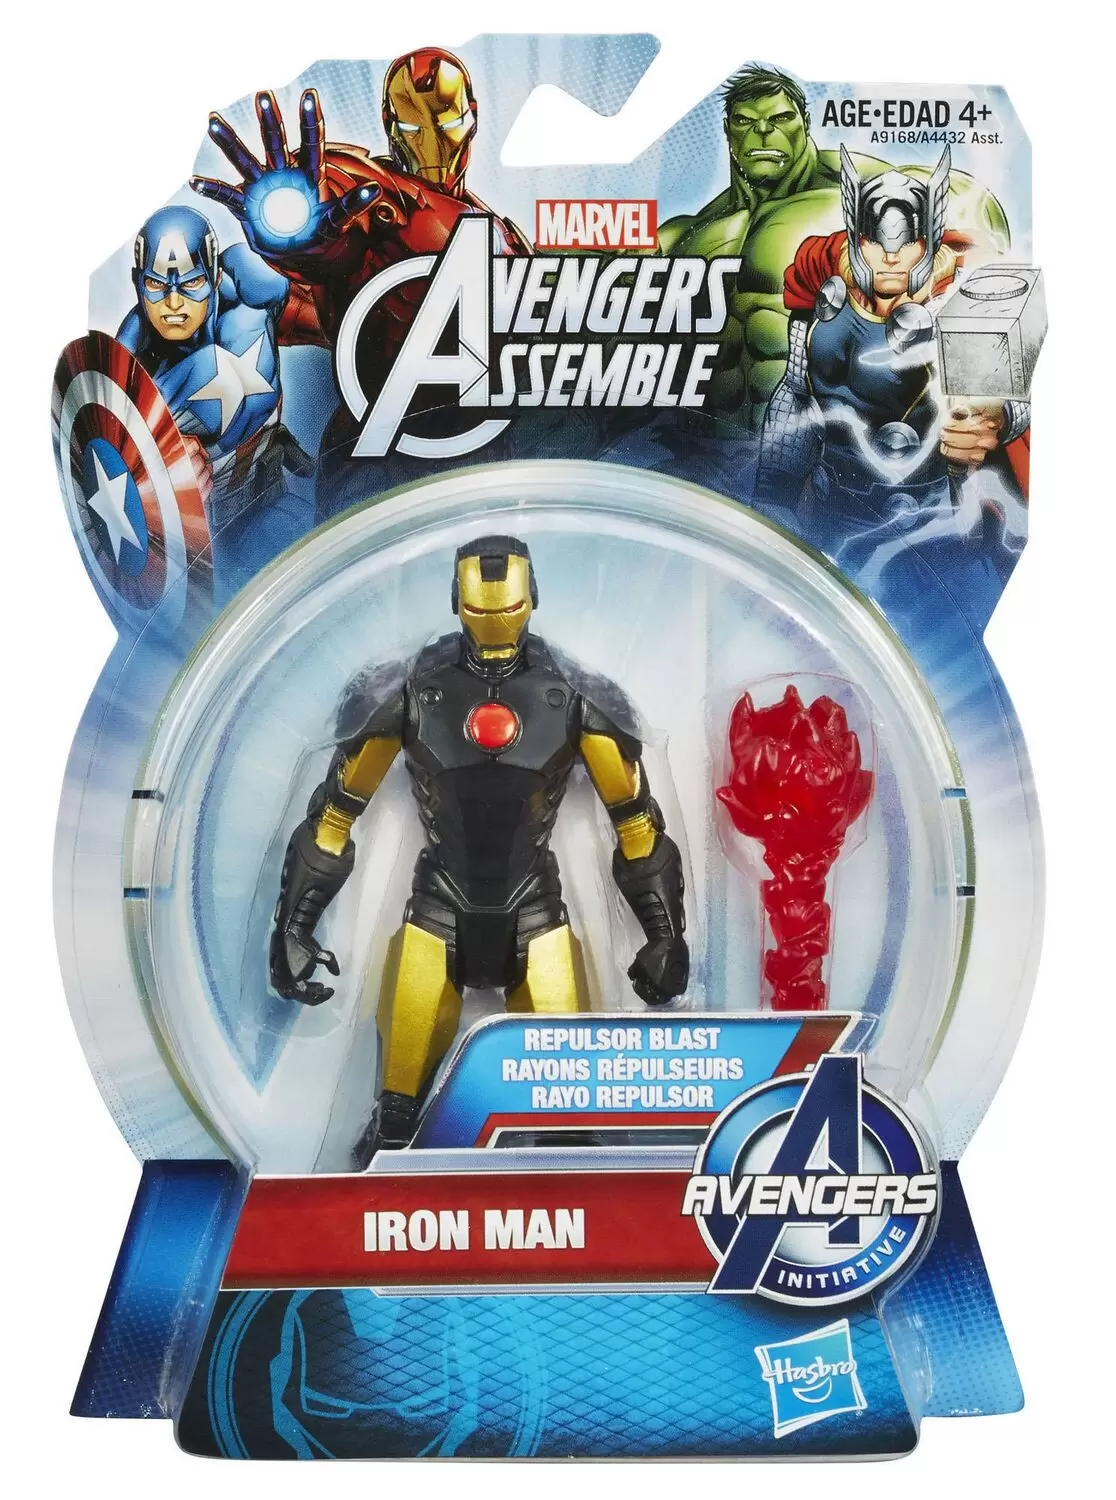 Avengers Assemble - Iron Man